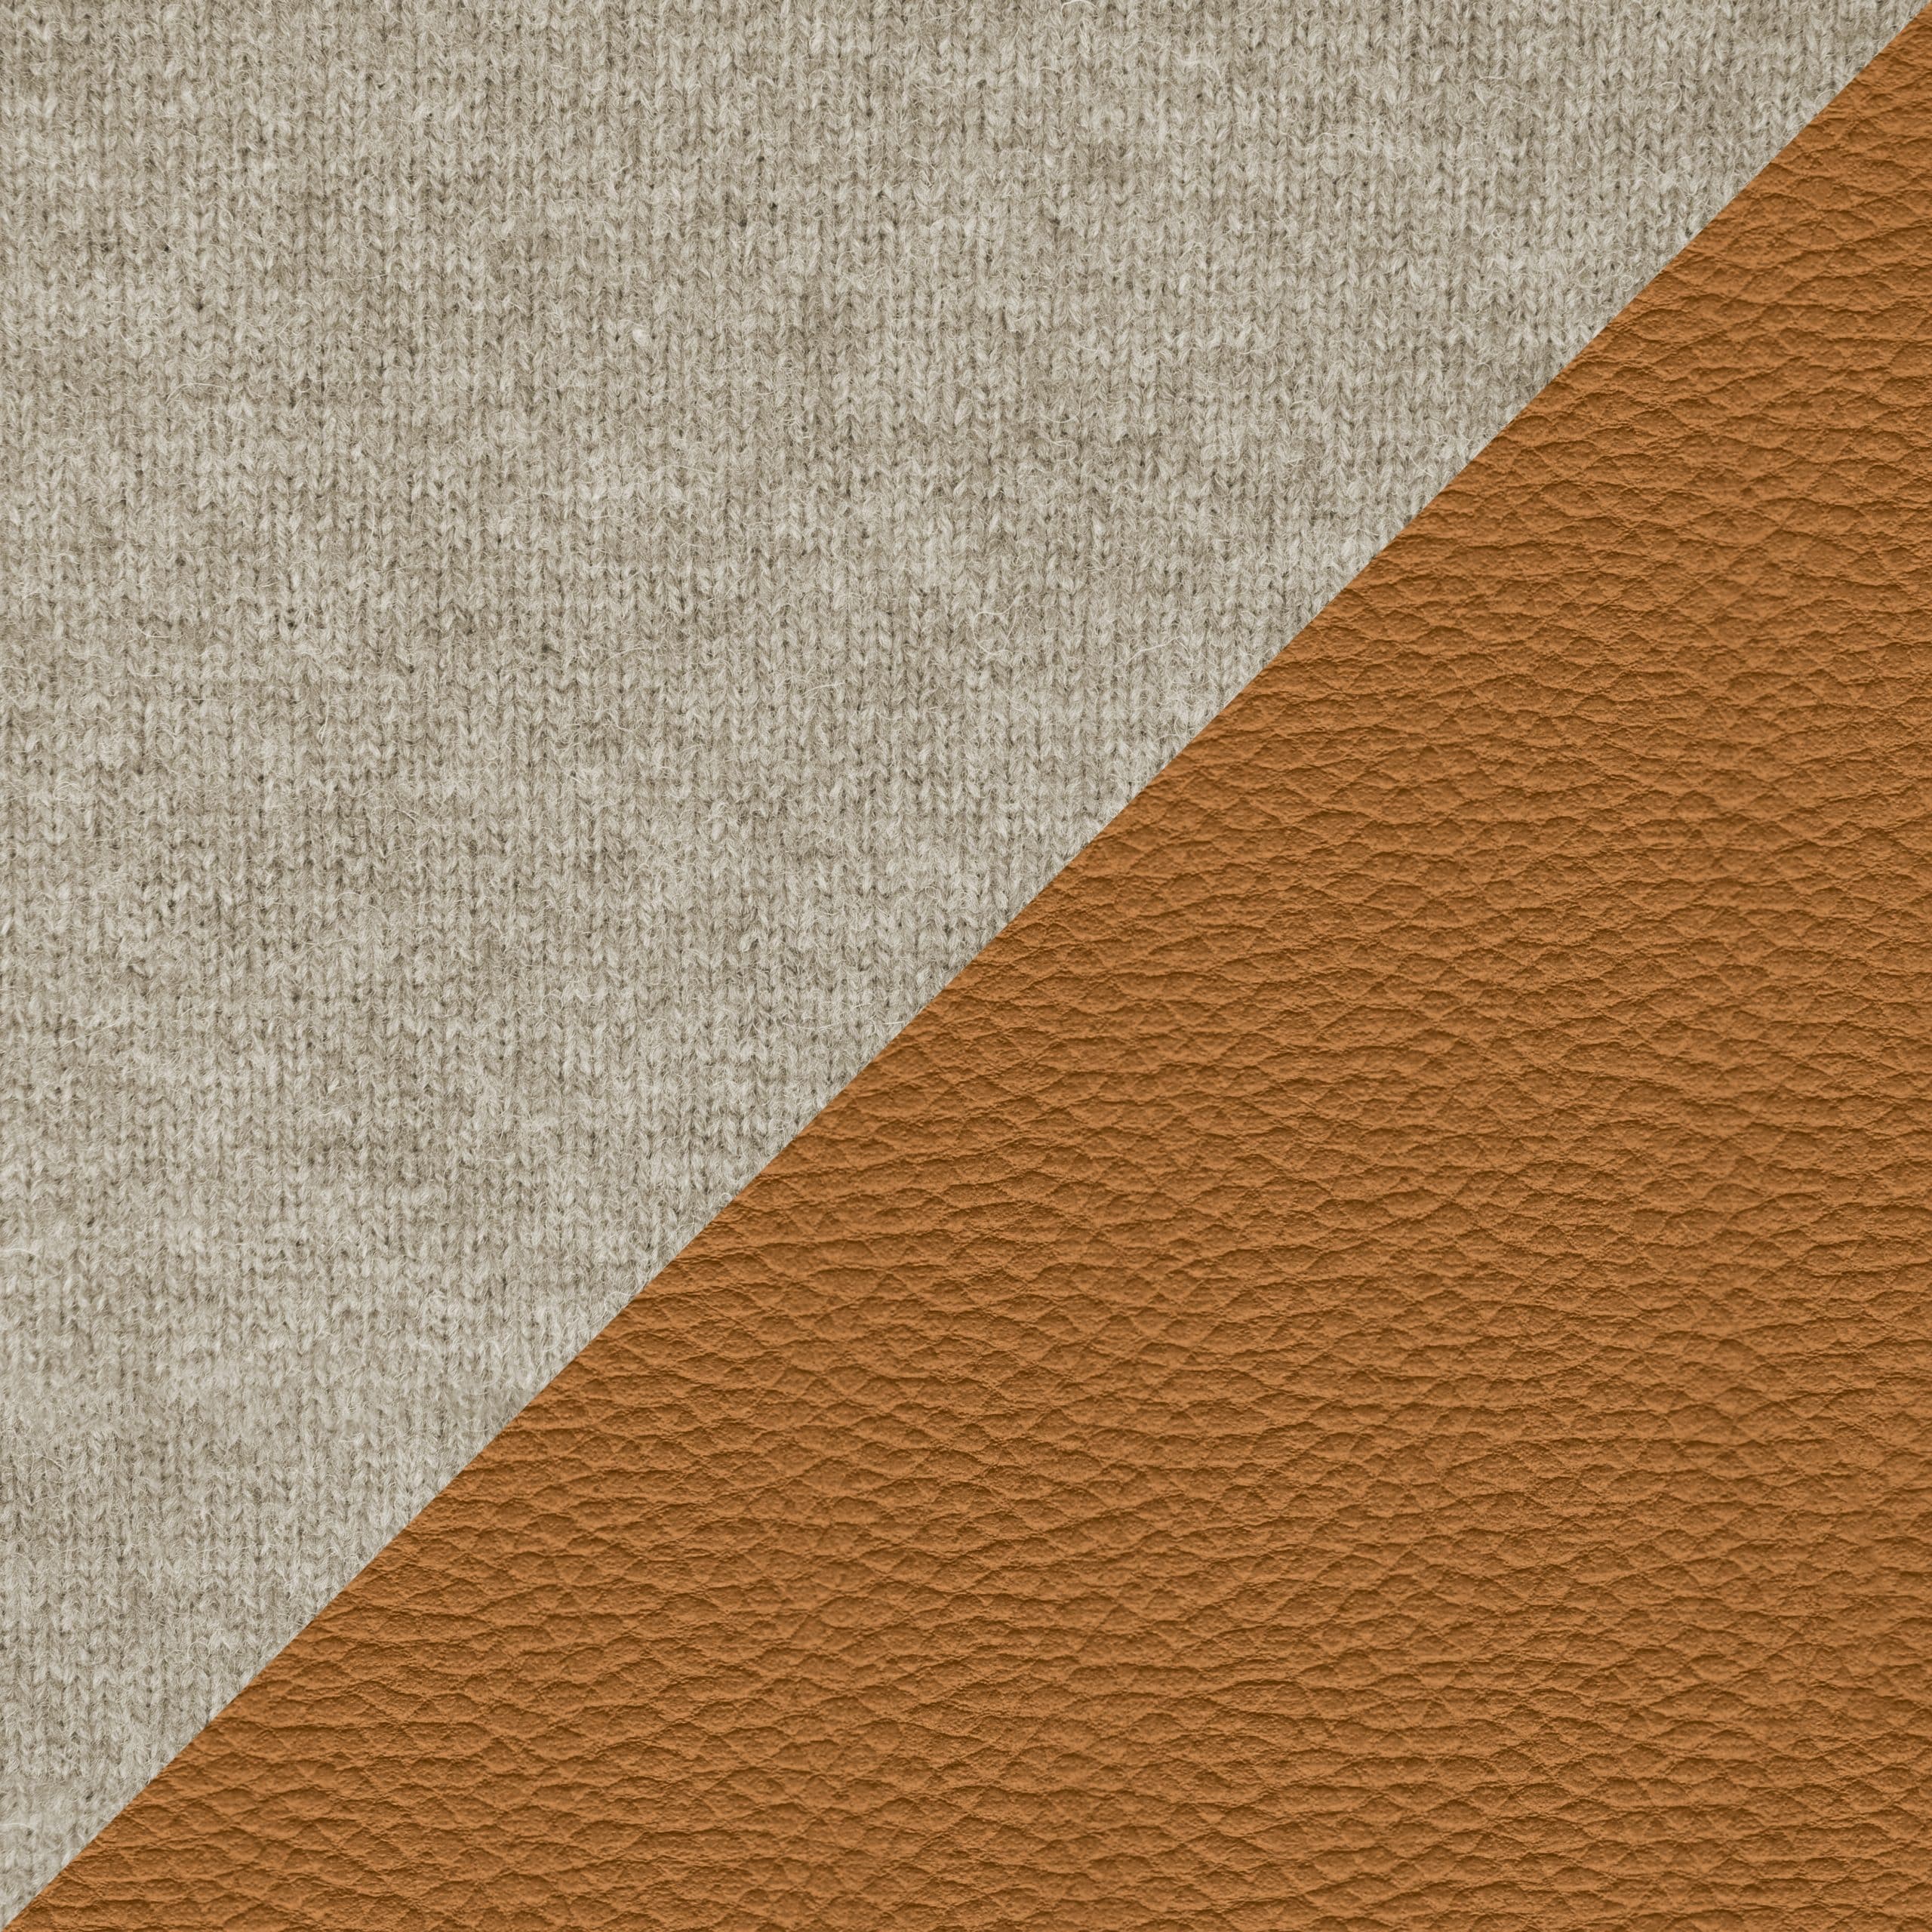 MO 150 Bay Sofa Caramel Brown Leather Sahara Beige Fabric Closeup 4 scaled 1